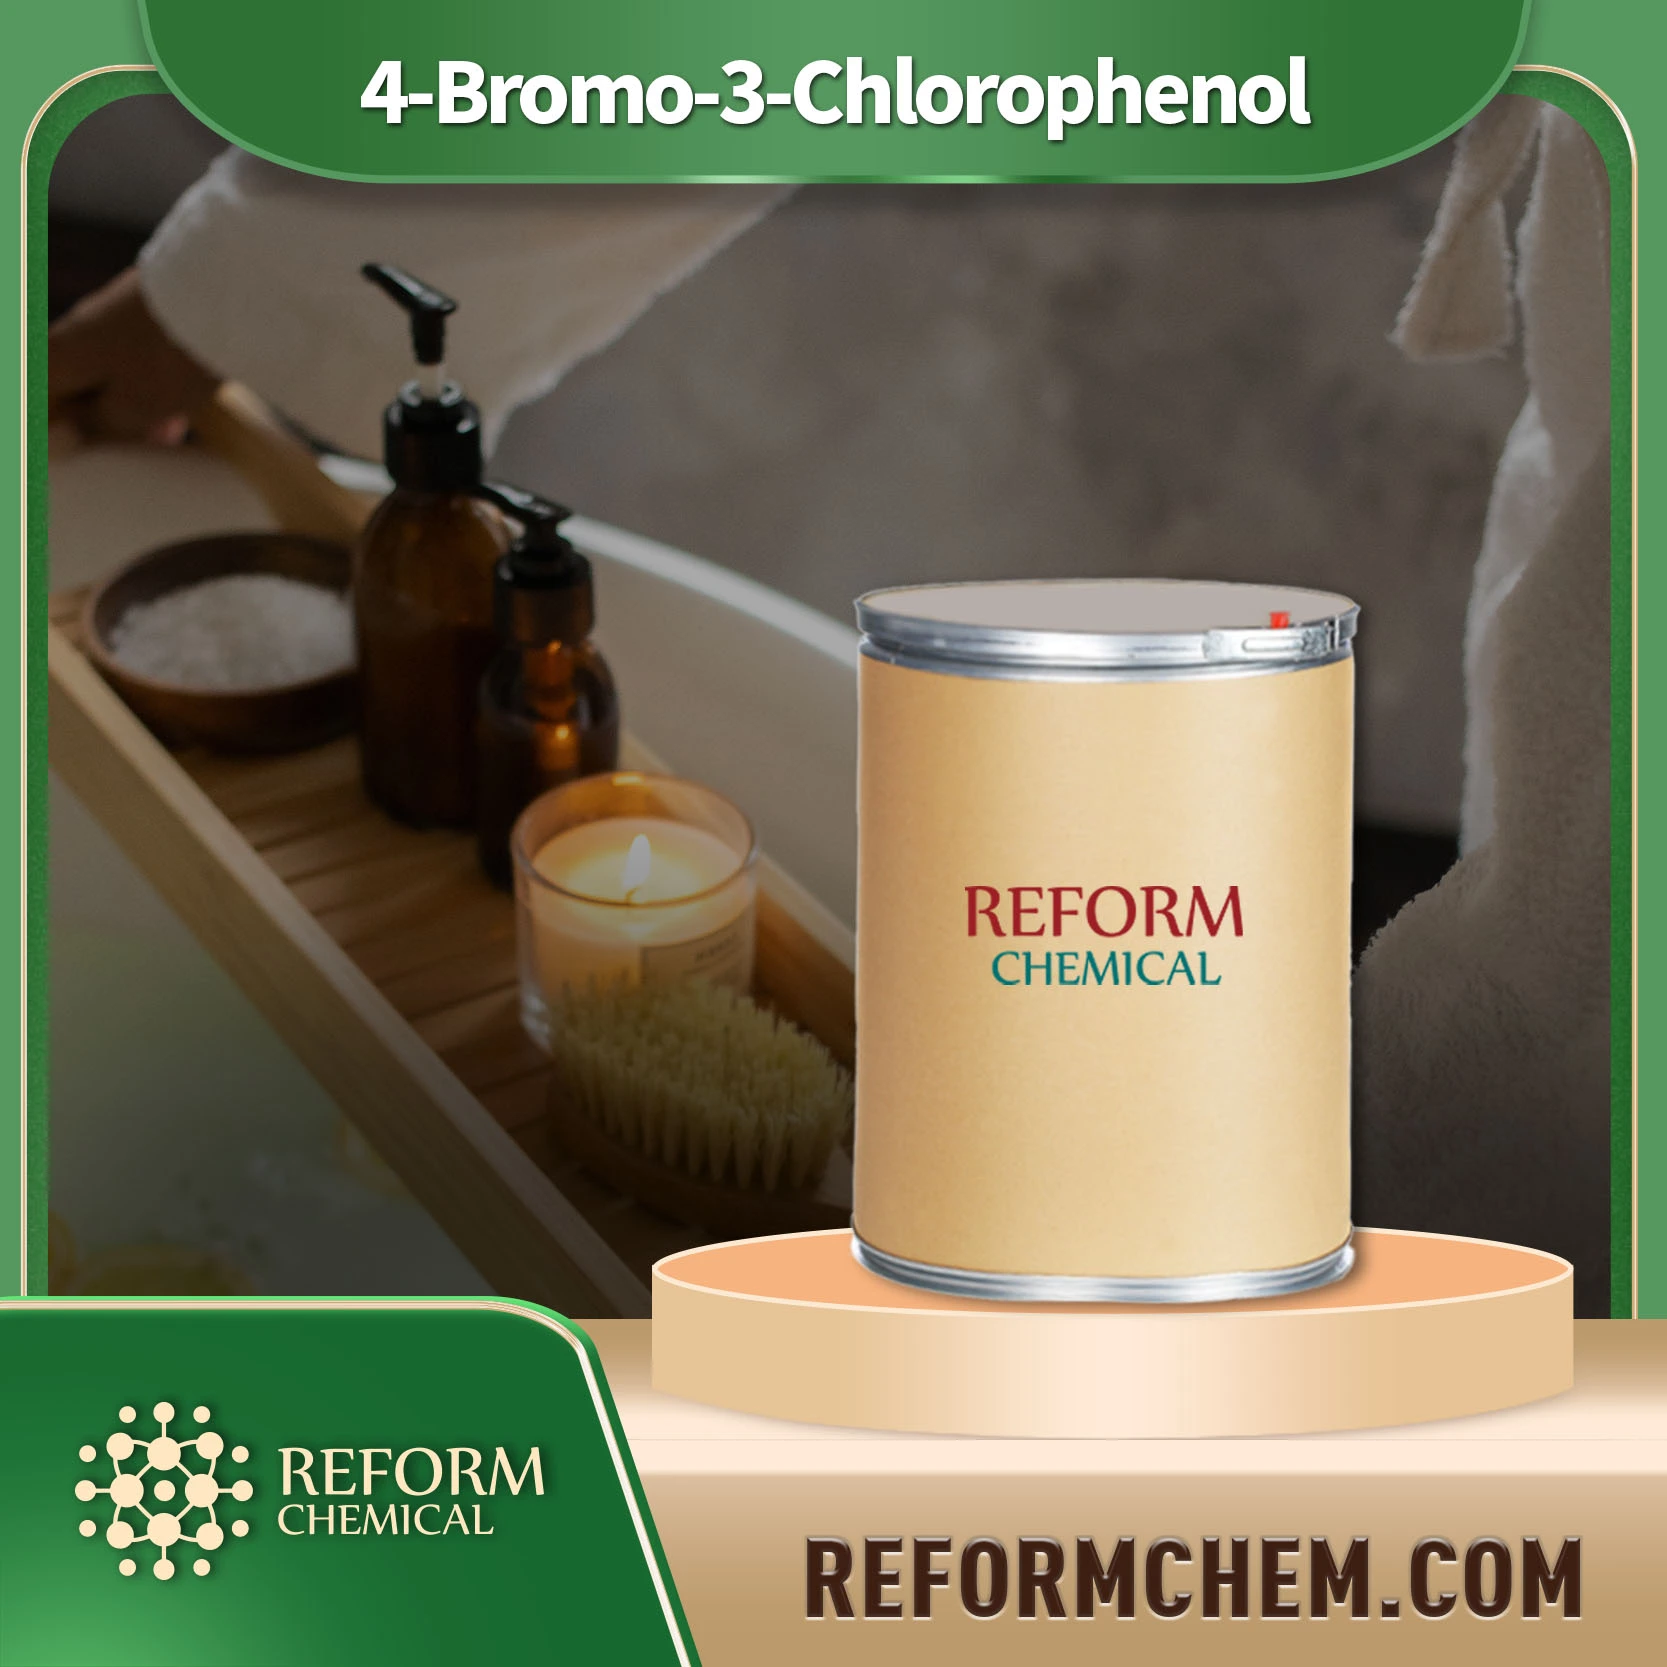 4-Bromo-3-Chlorophenol